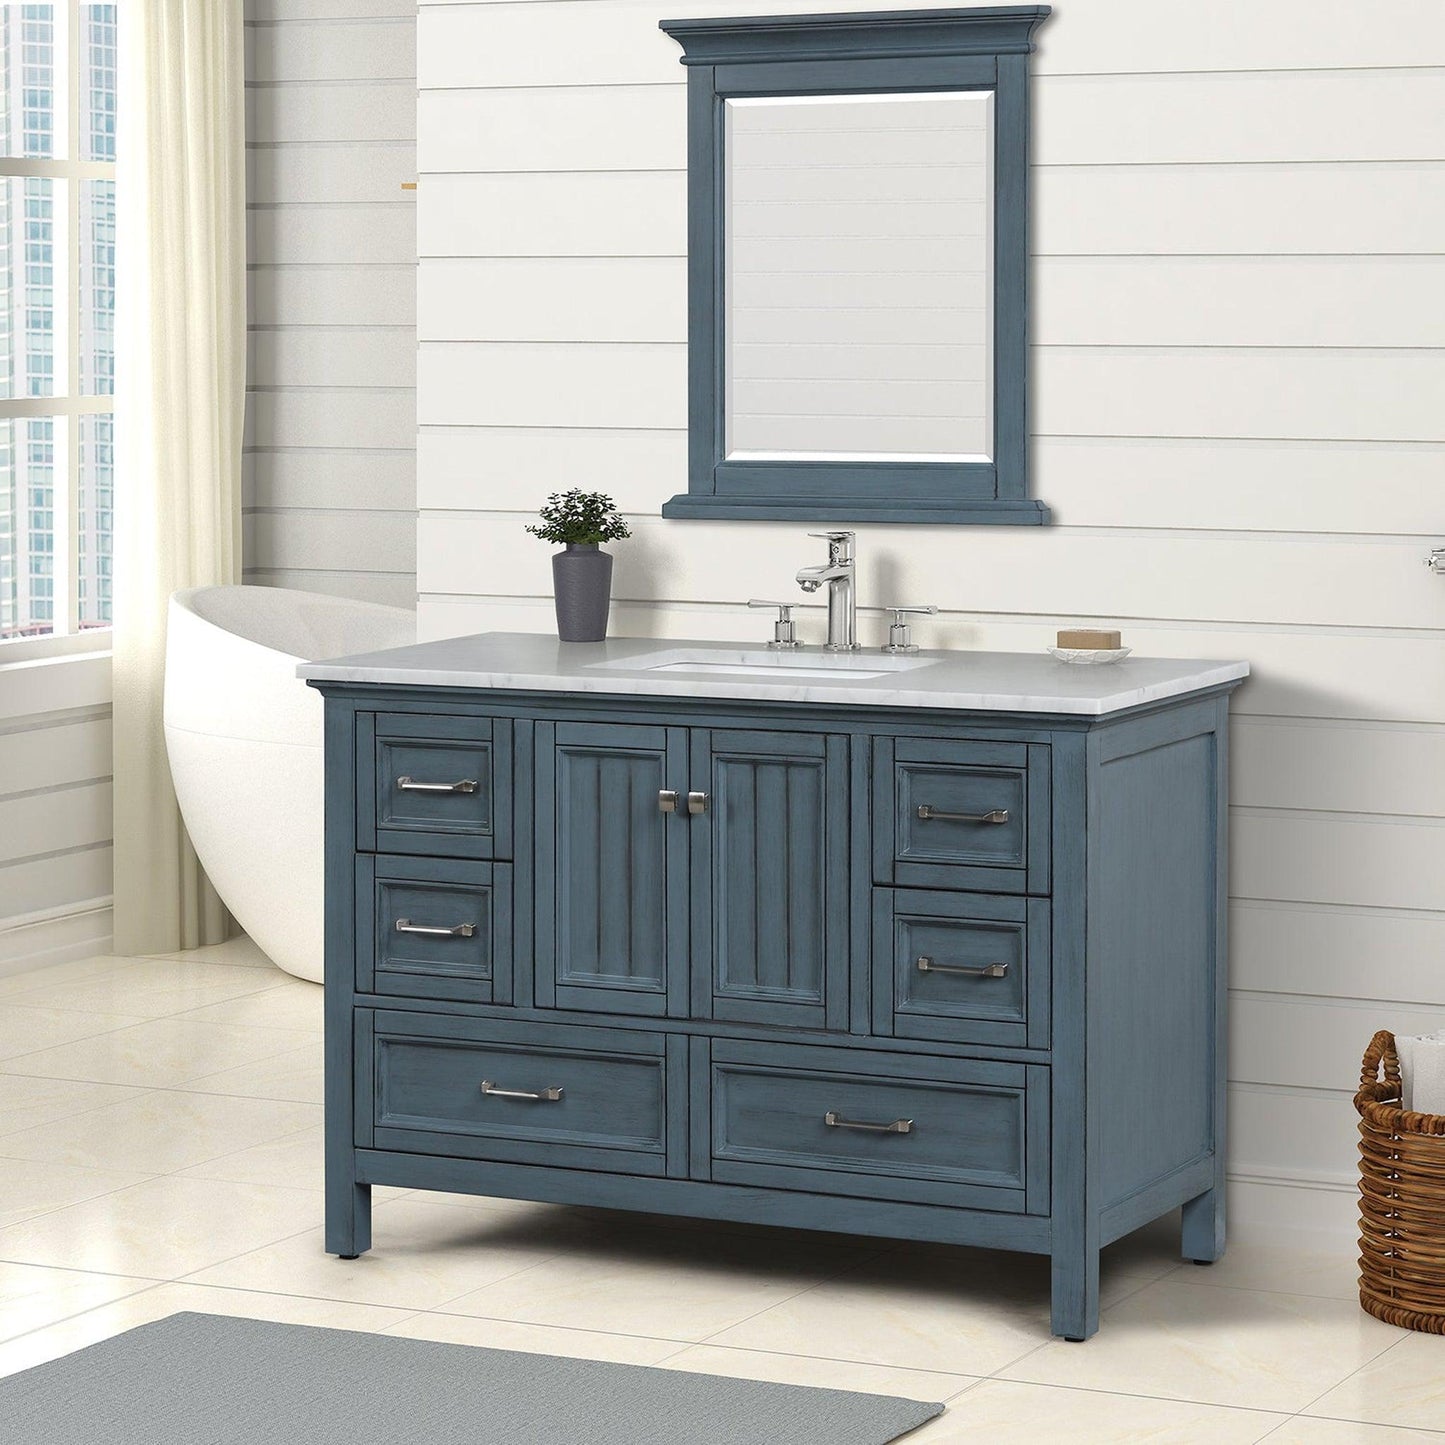 Eviva Britney 48" x 34" Ash Blue Freestanding Bathroom Vanity With Carrara Marble Countertop and Single Undermount Ceramic Sink